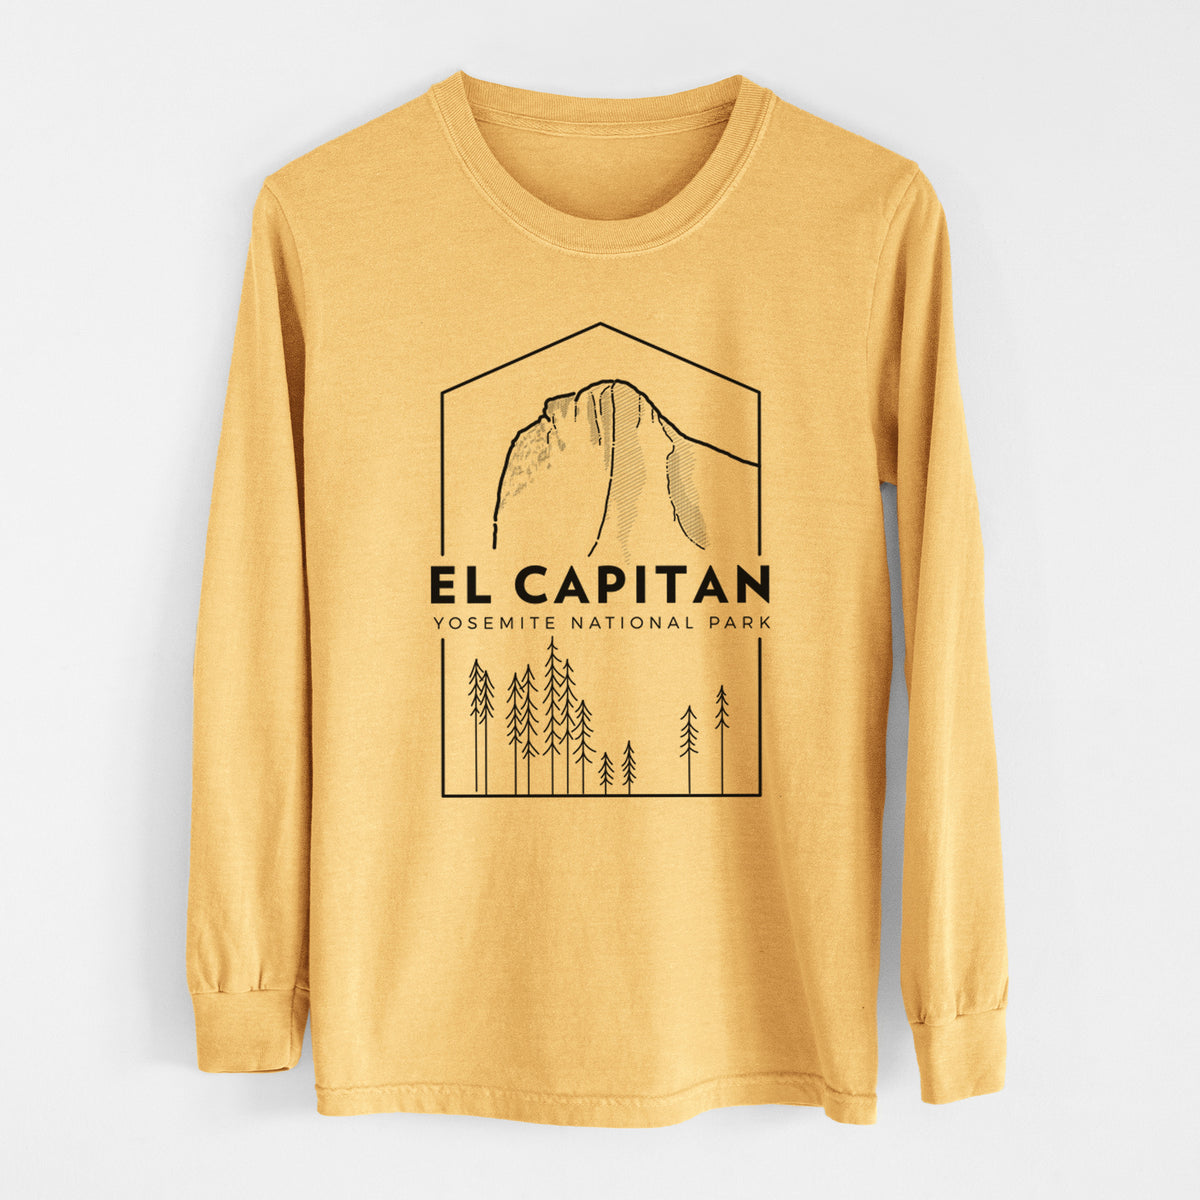 El Capitan - Yosemite National Park - Heavyweight 100% Cotton Long Sleeve